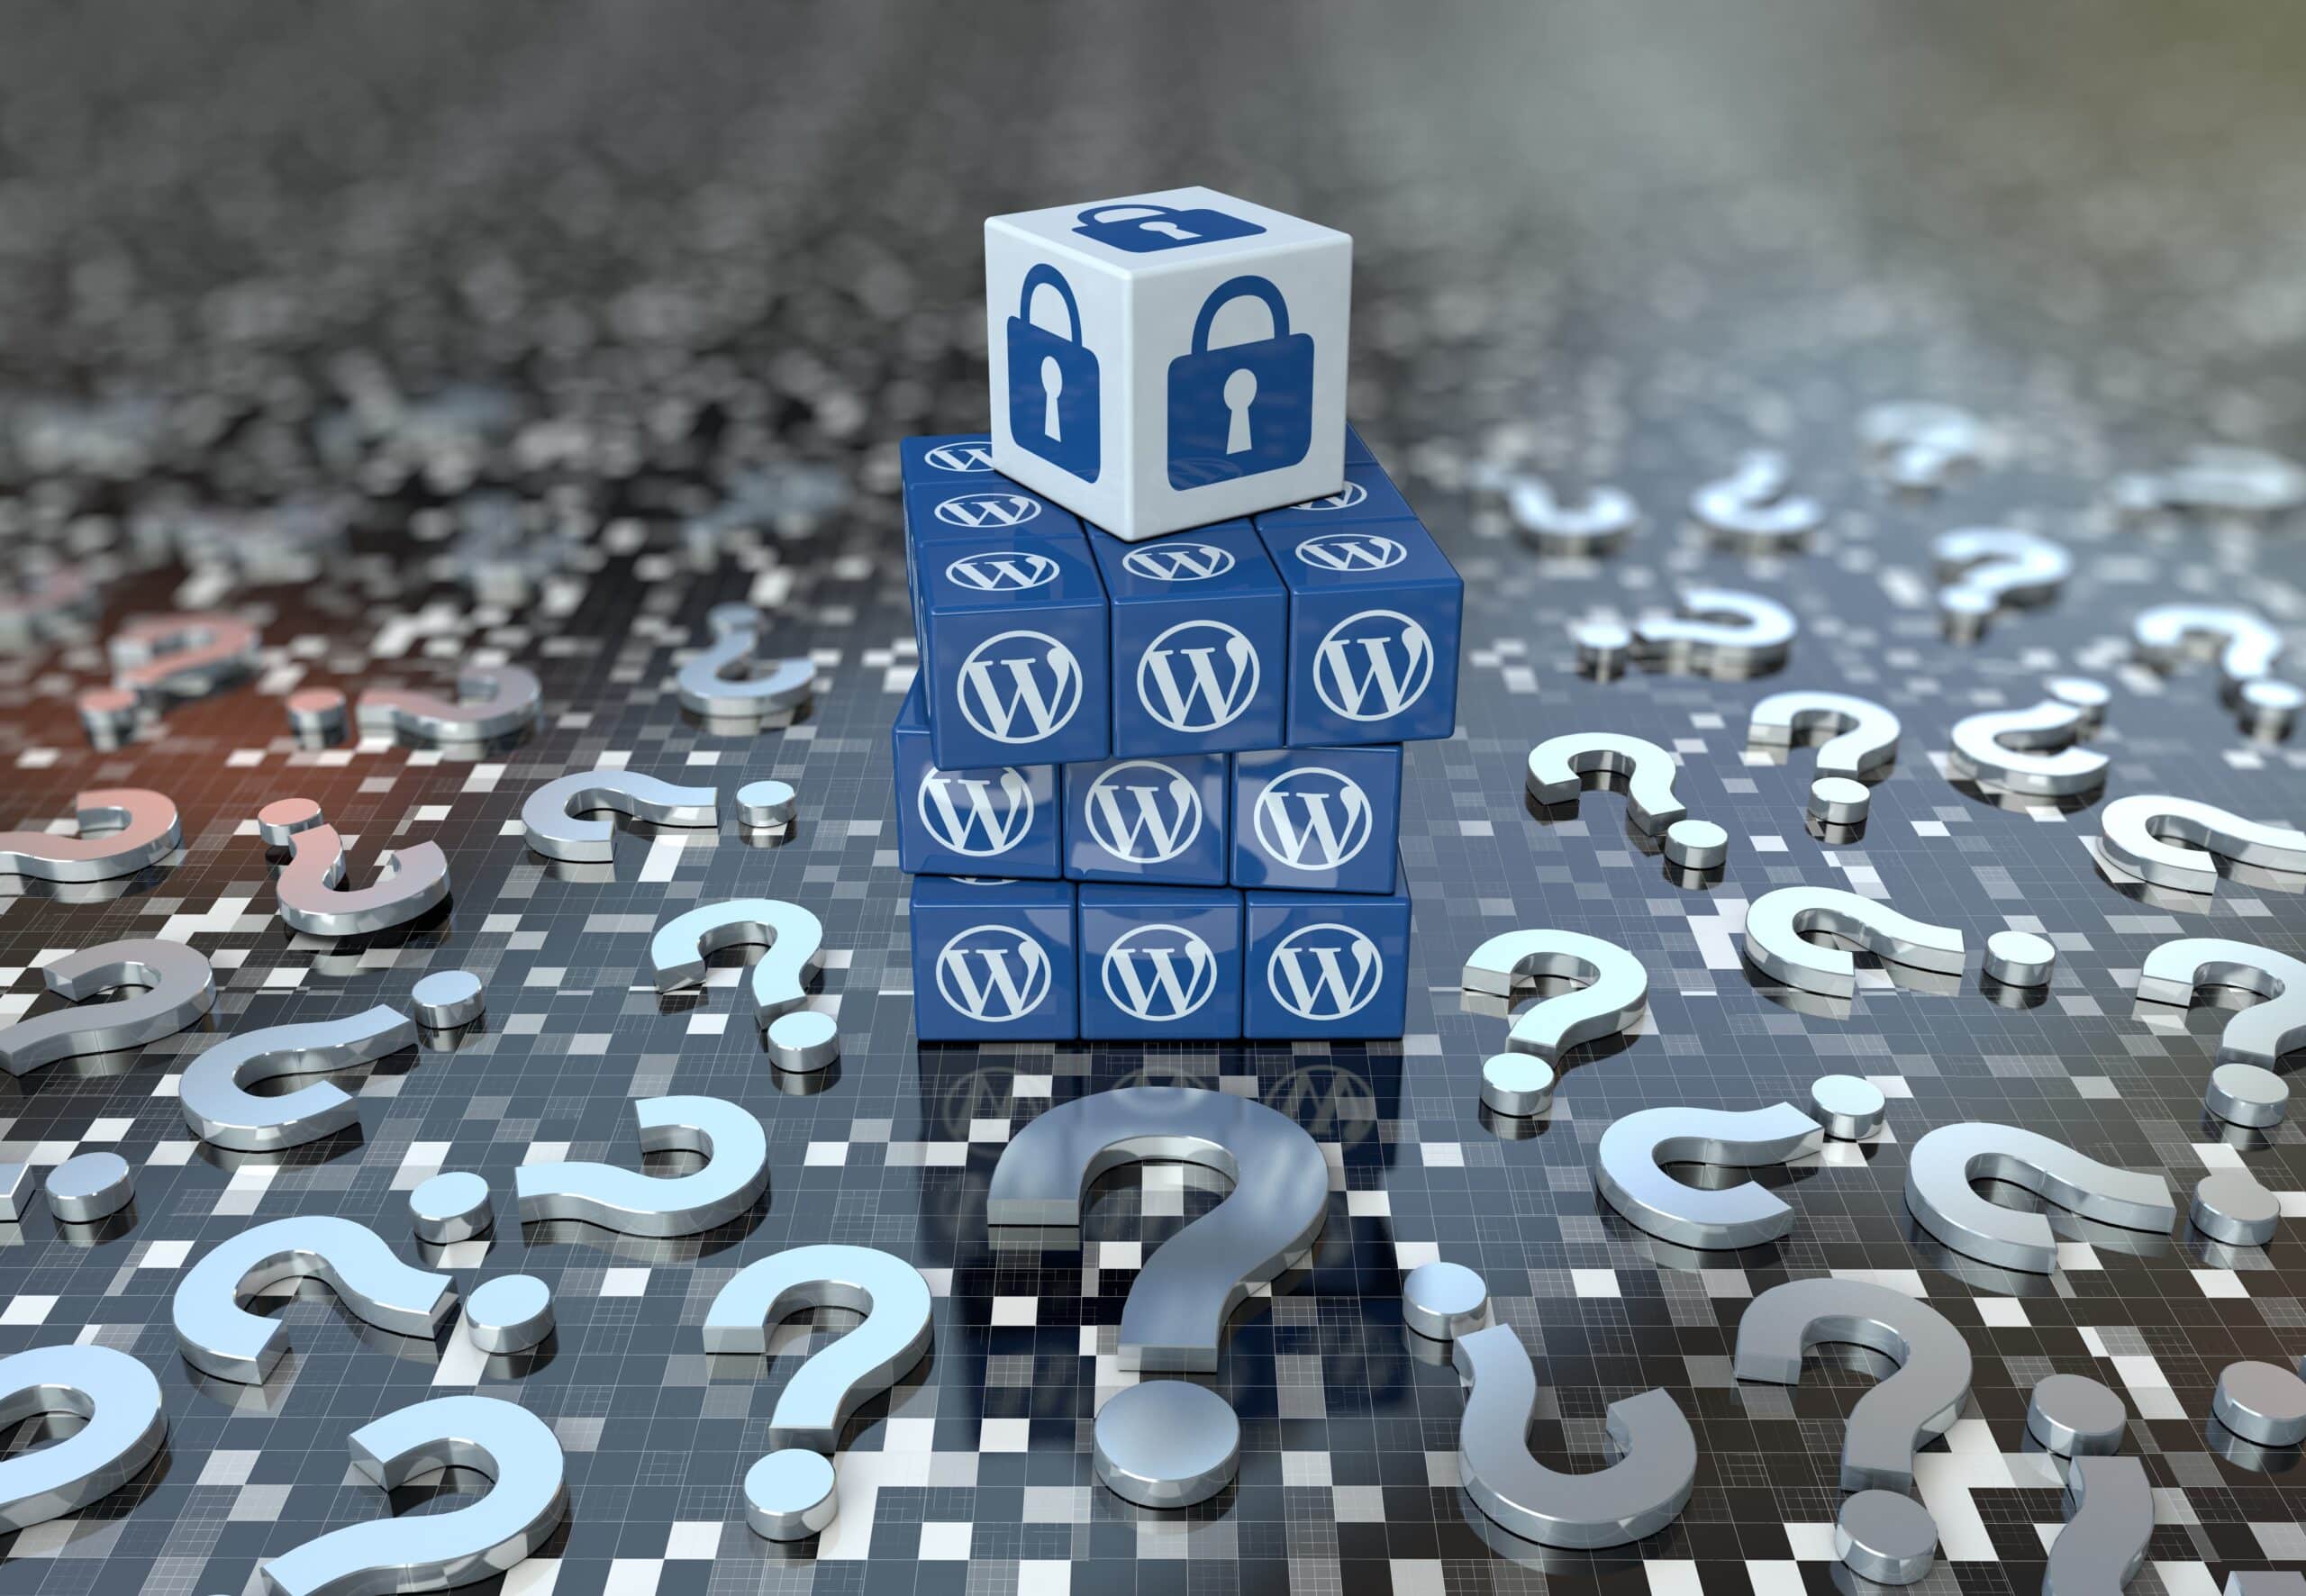 WordPress is secure